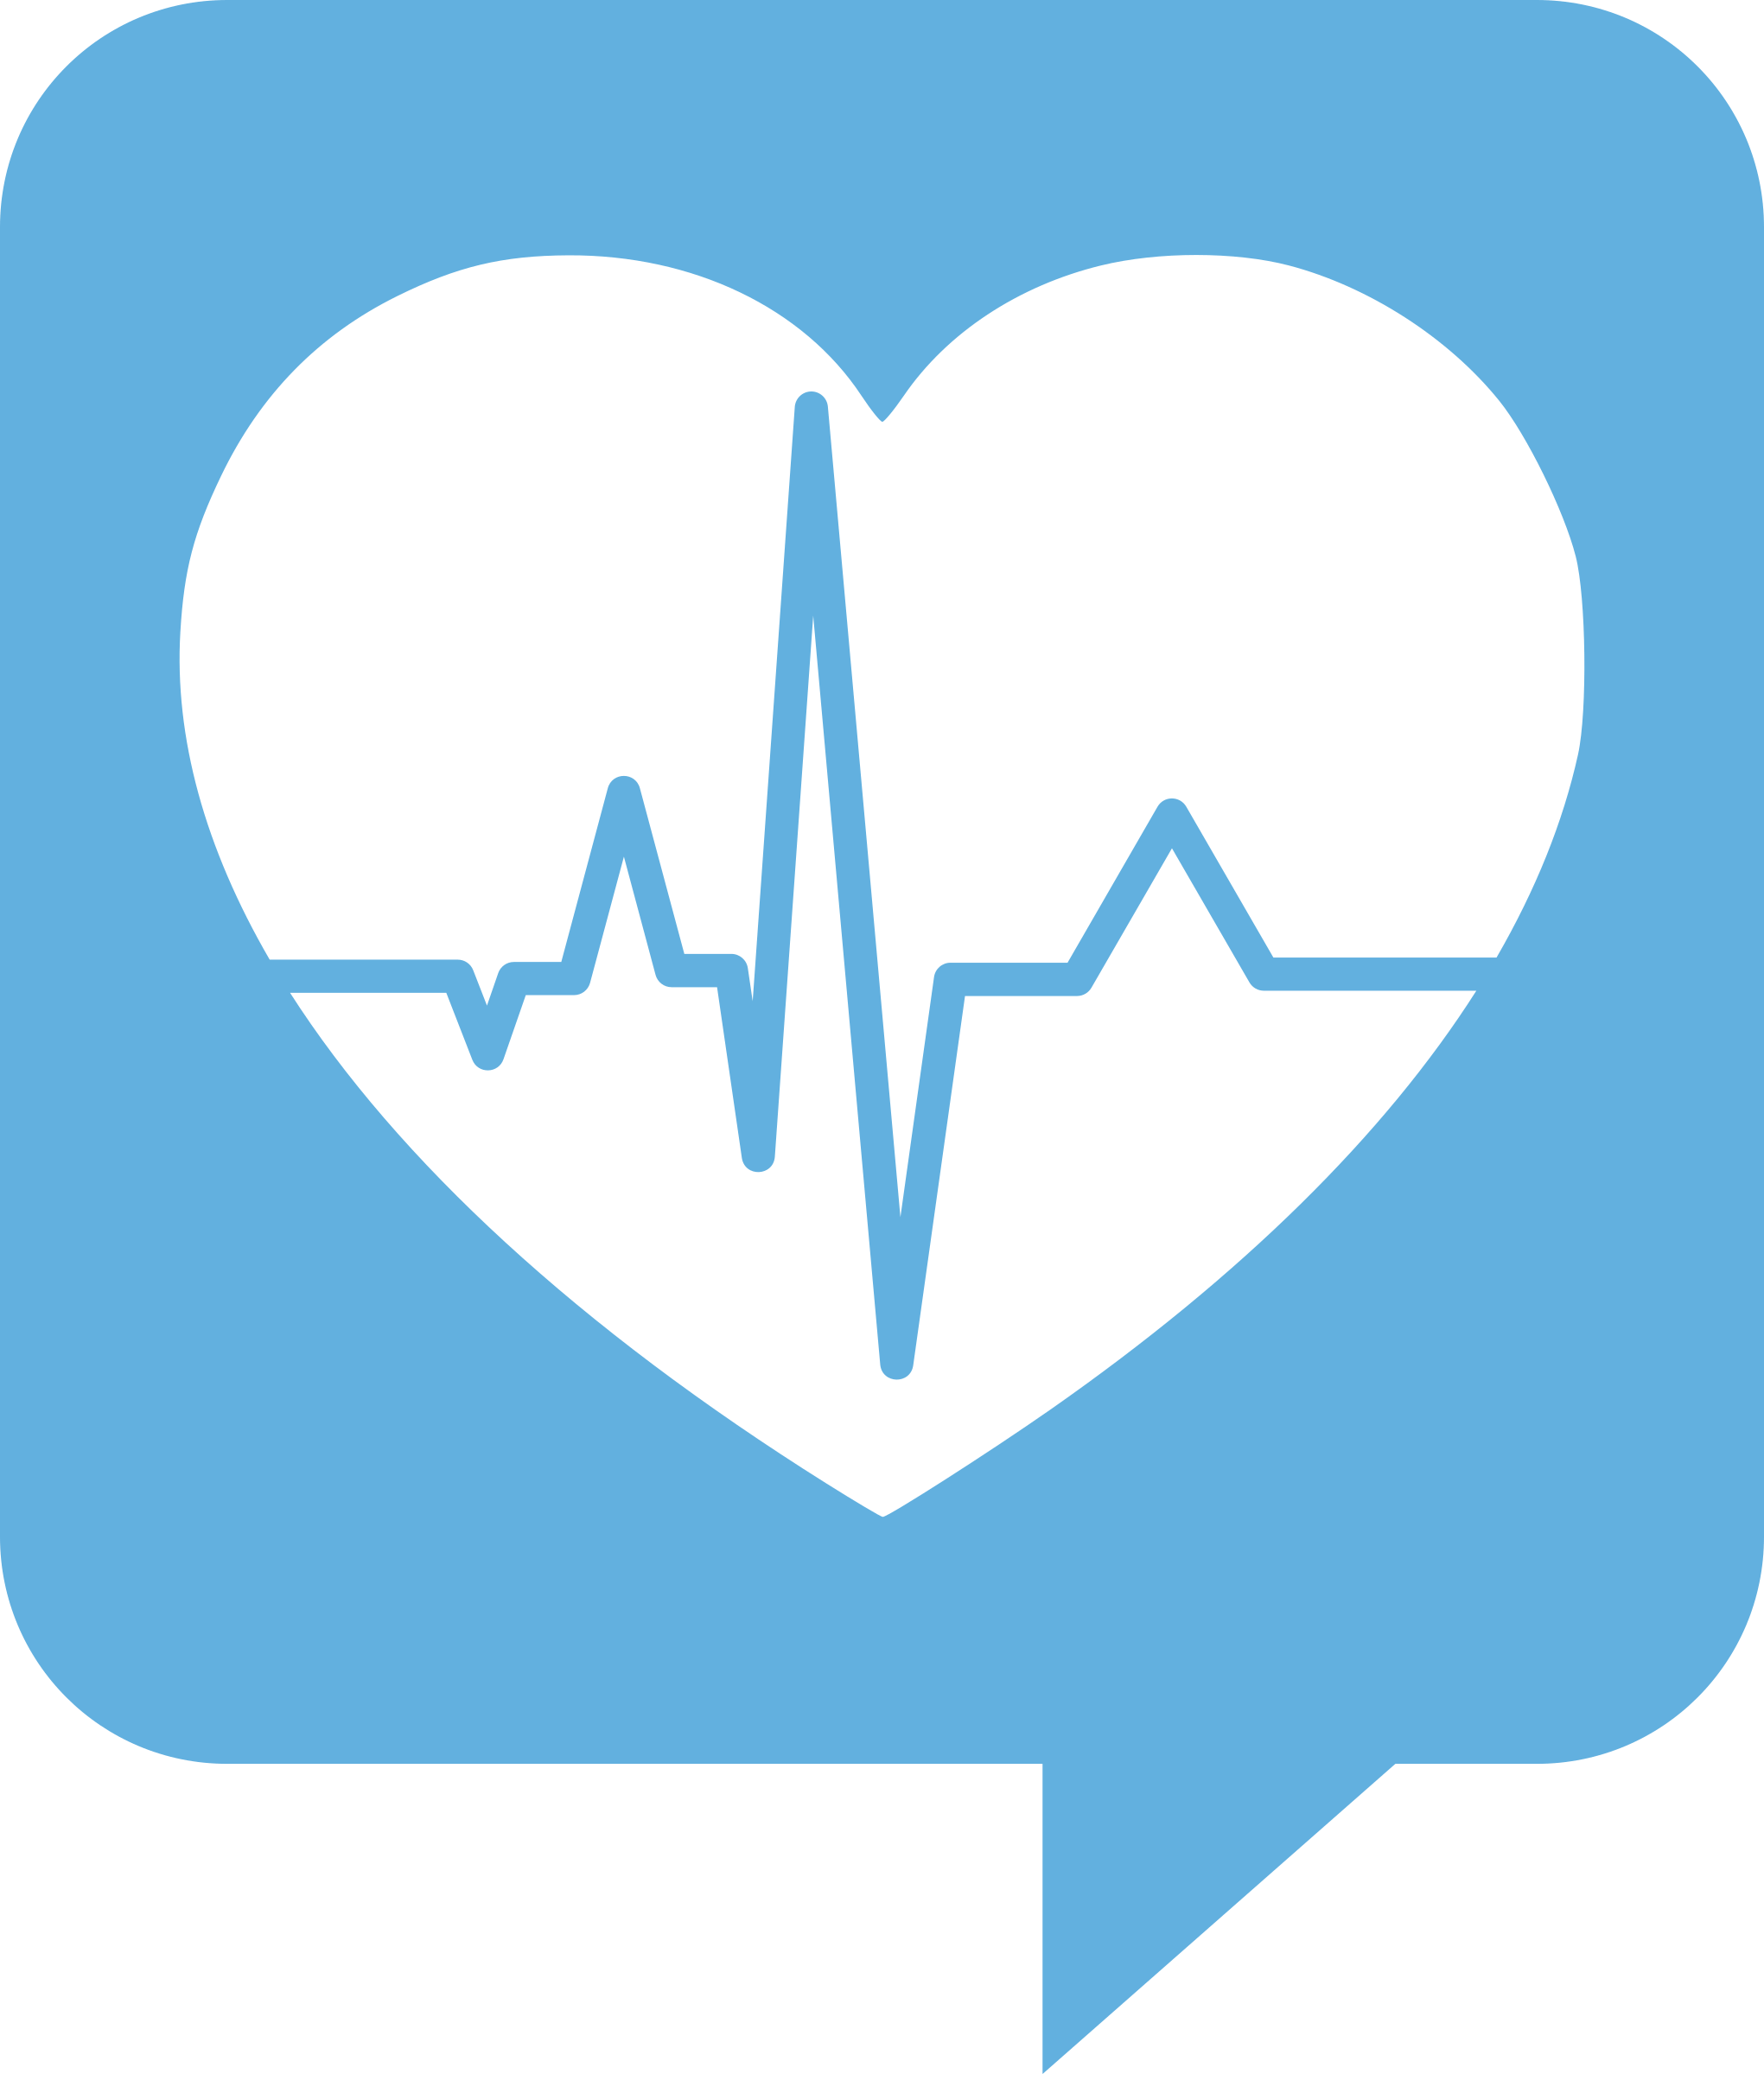 Heart Beat Logo - Clipart Logo for Health.SE. No background. White heart